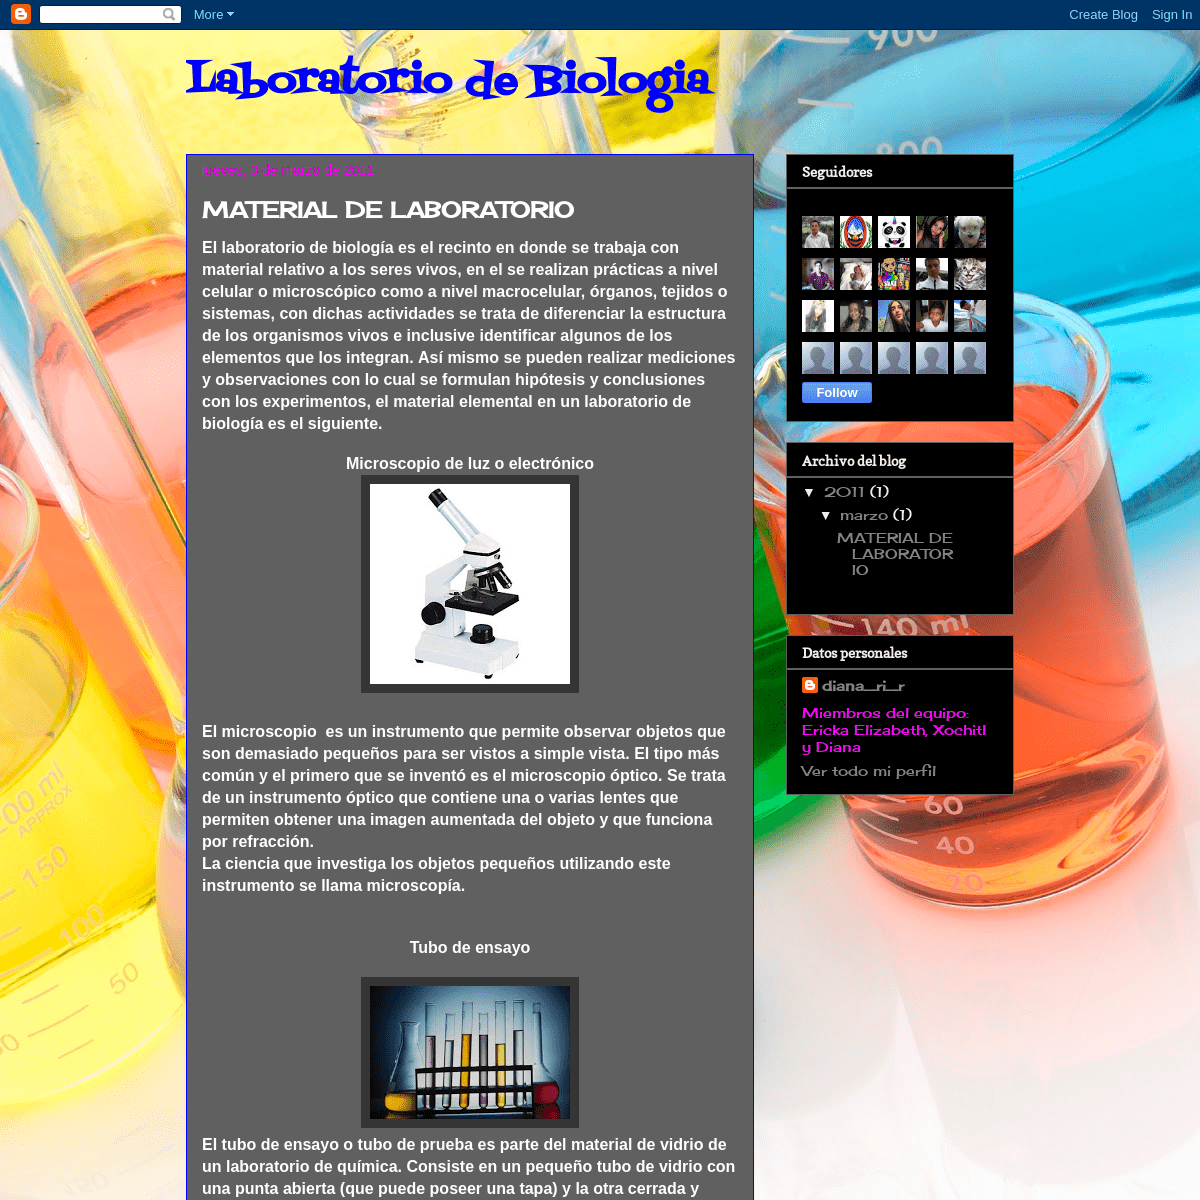 A complete backup of laboratoriodianariv.blogspot.com